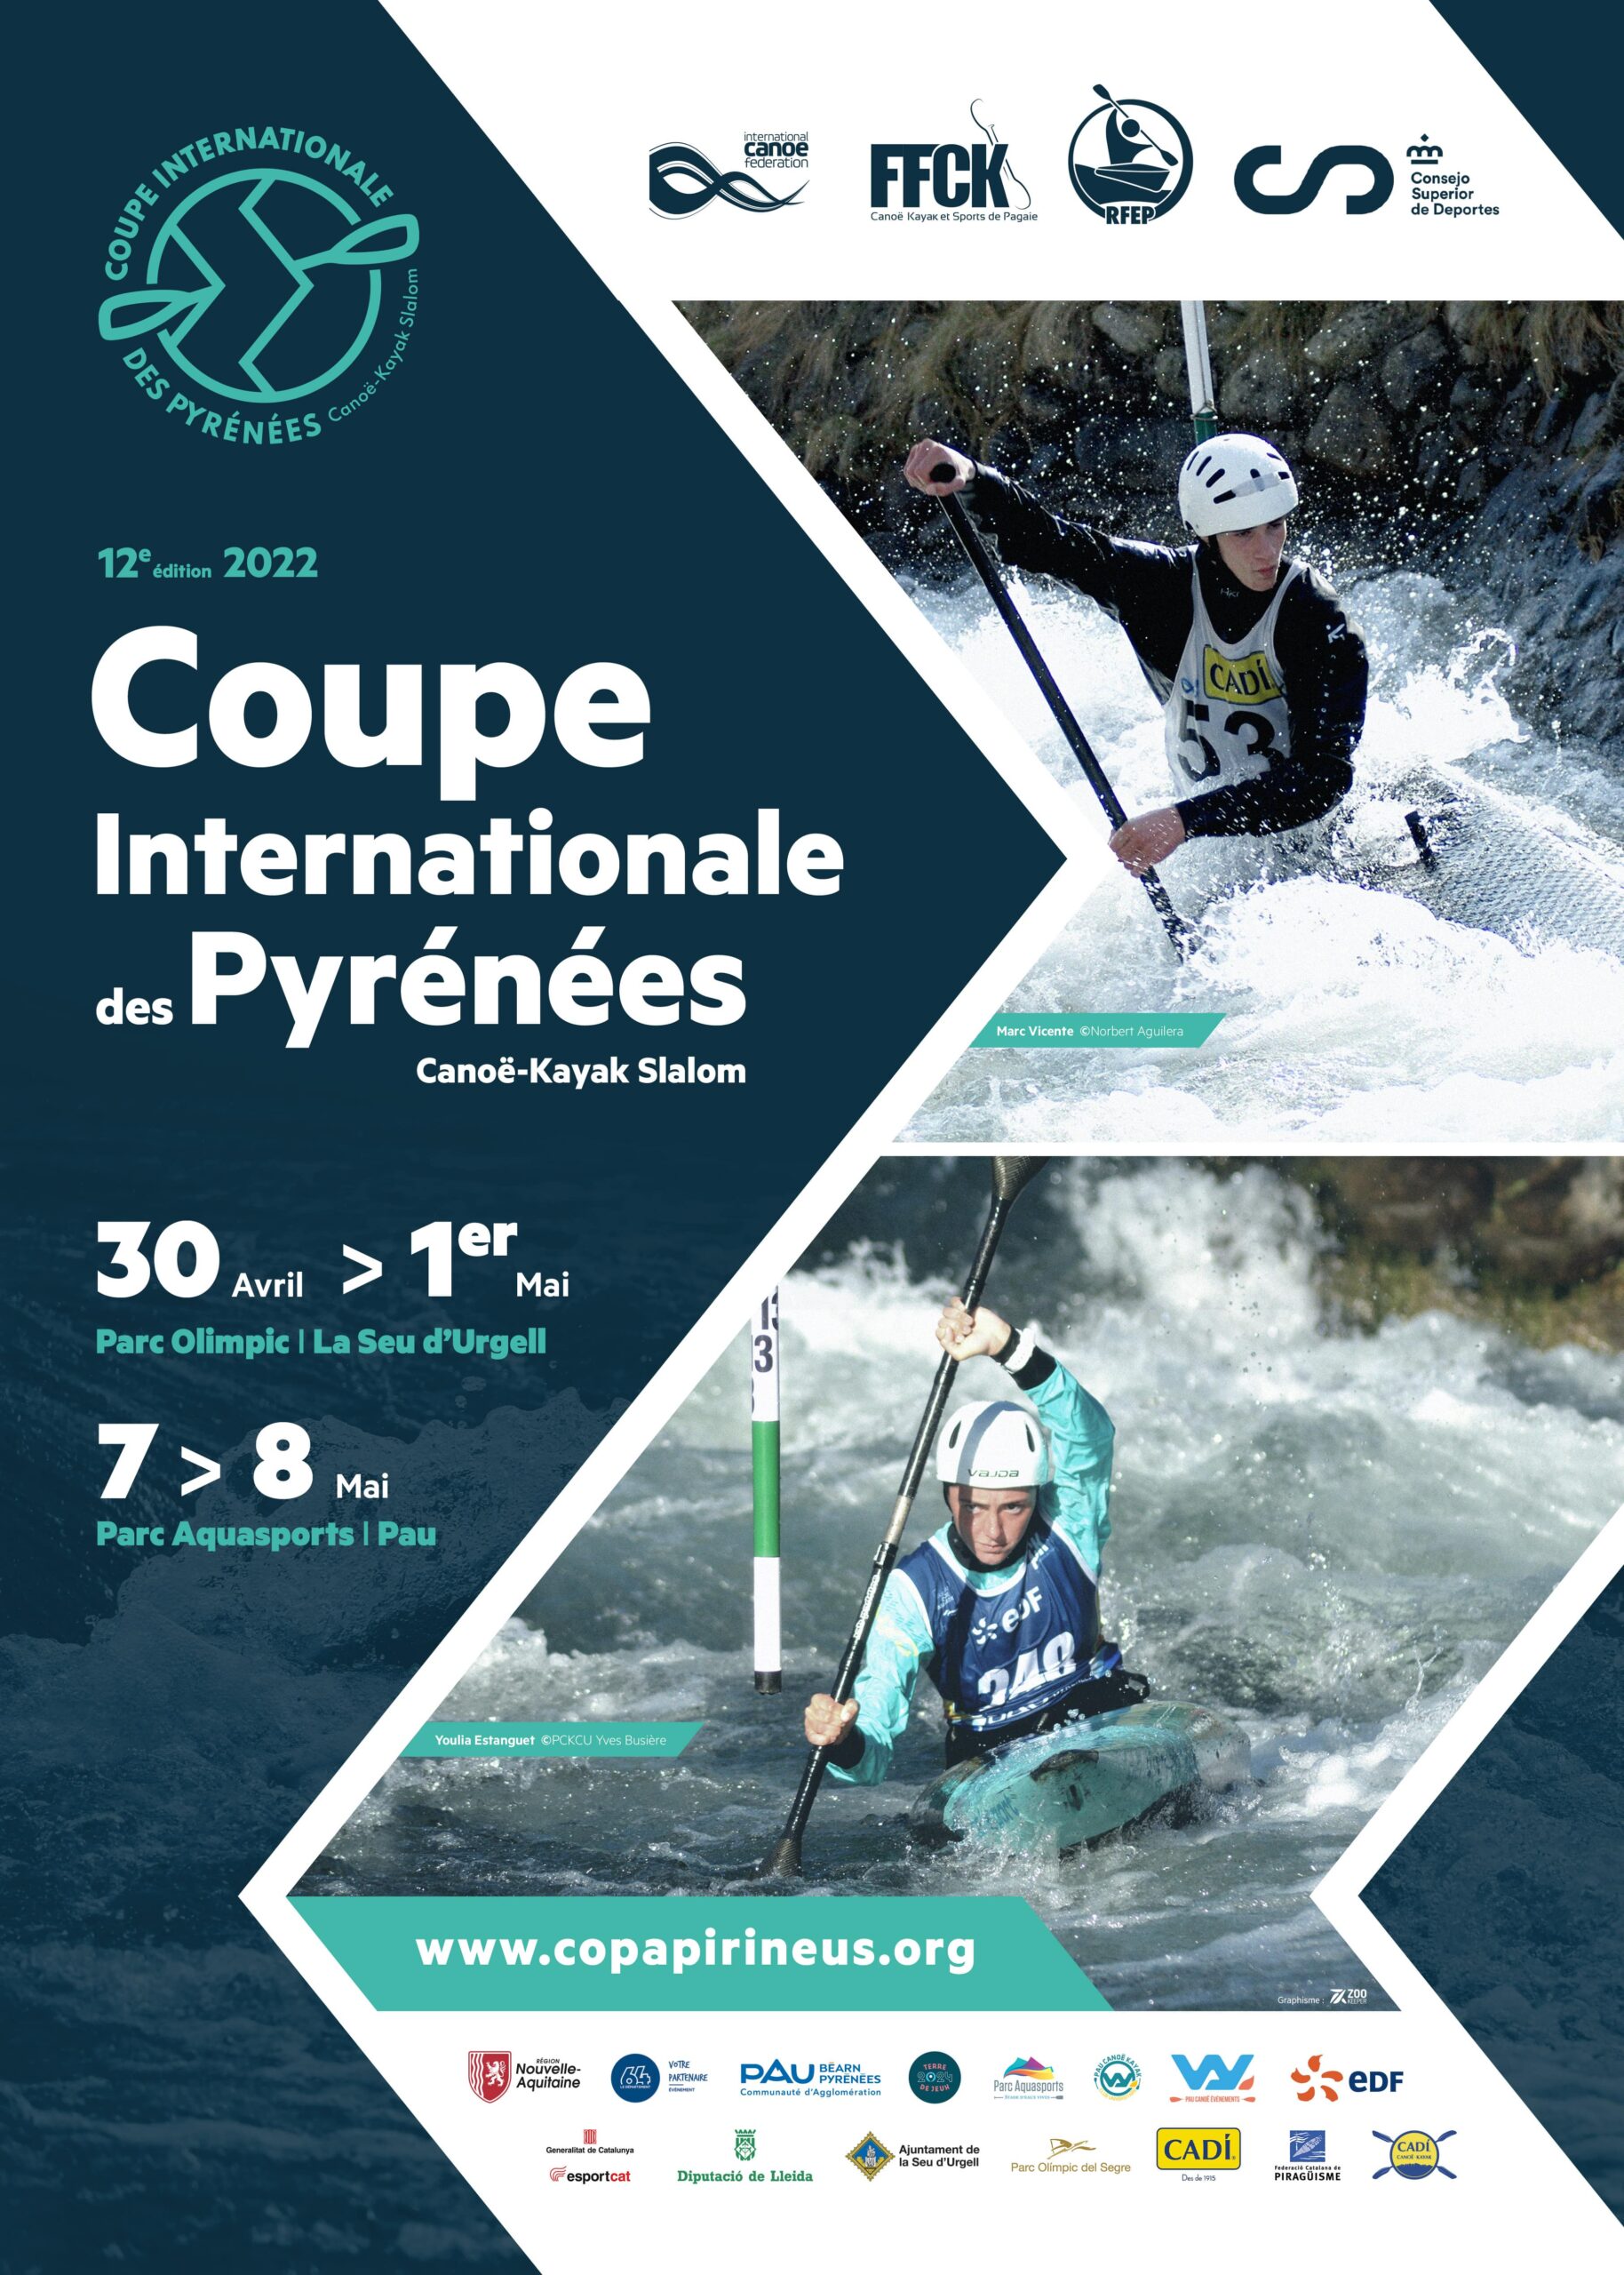 evenement international pau canoe kayak slalom extrême